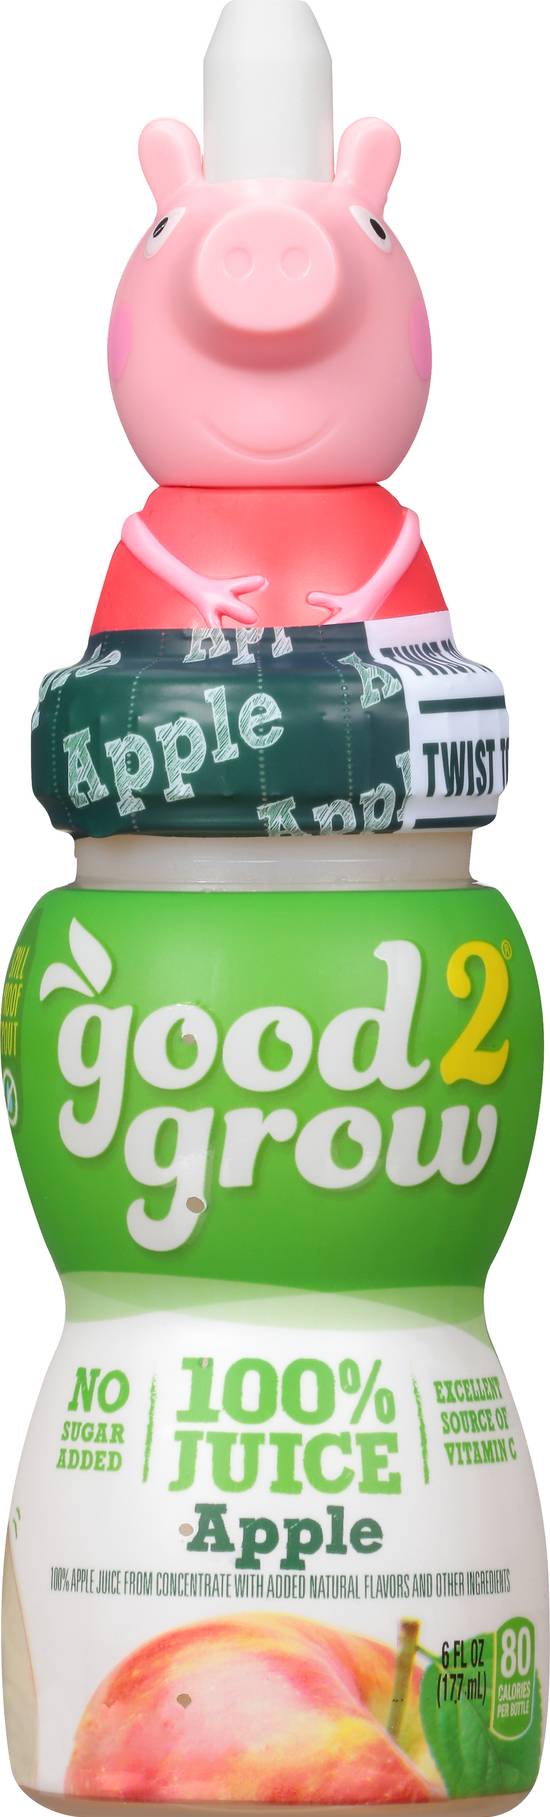 Good2grow 100% Apple Juice (6 fl oz)